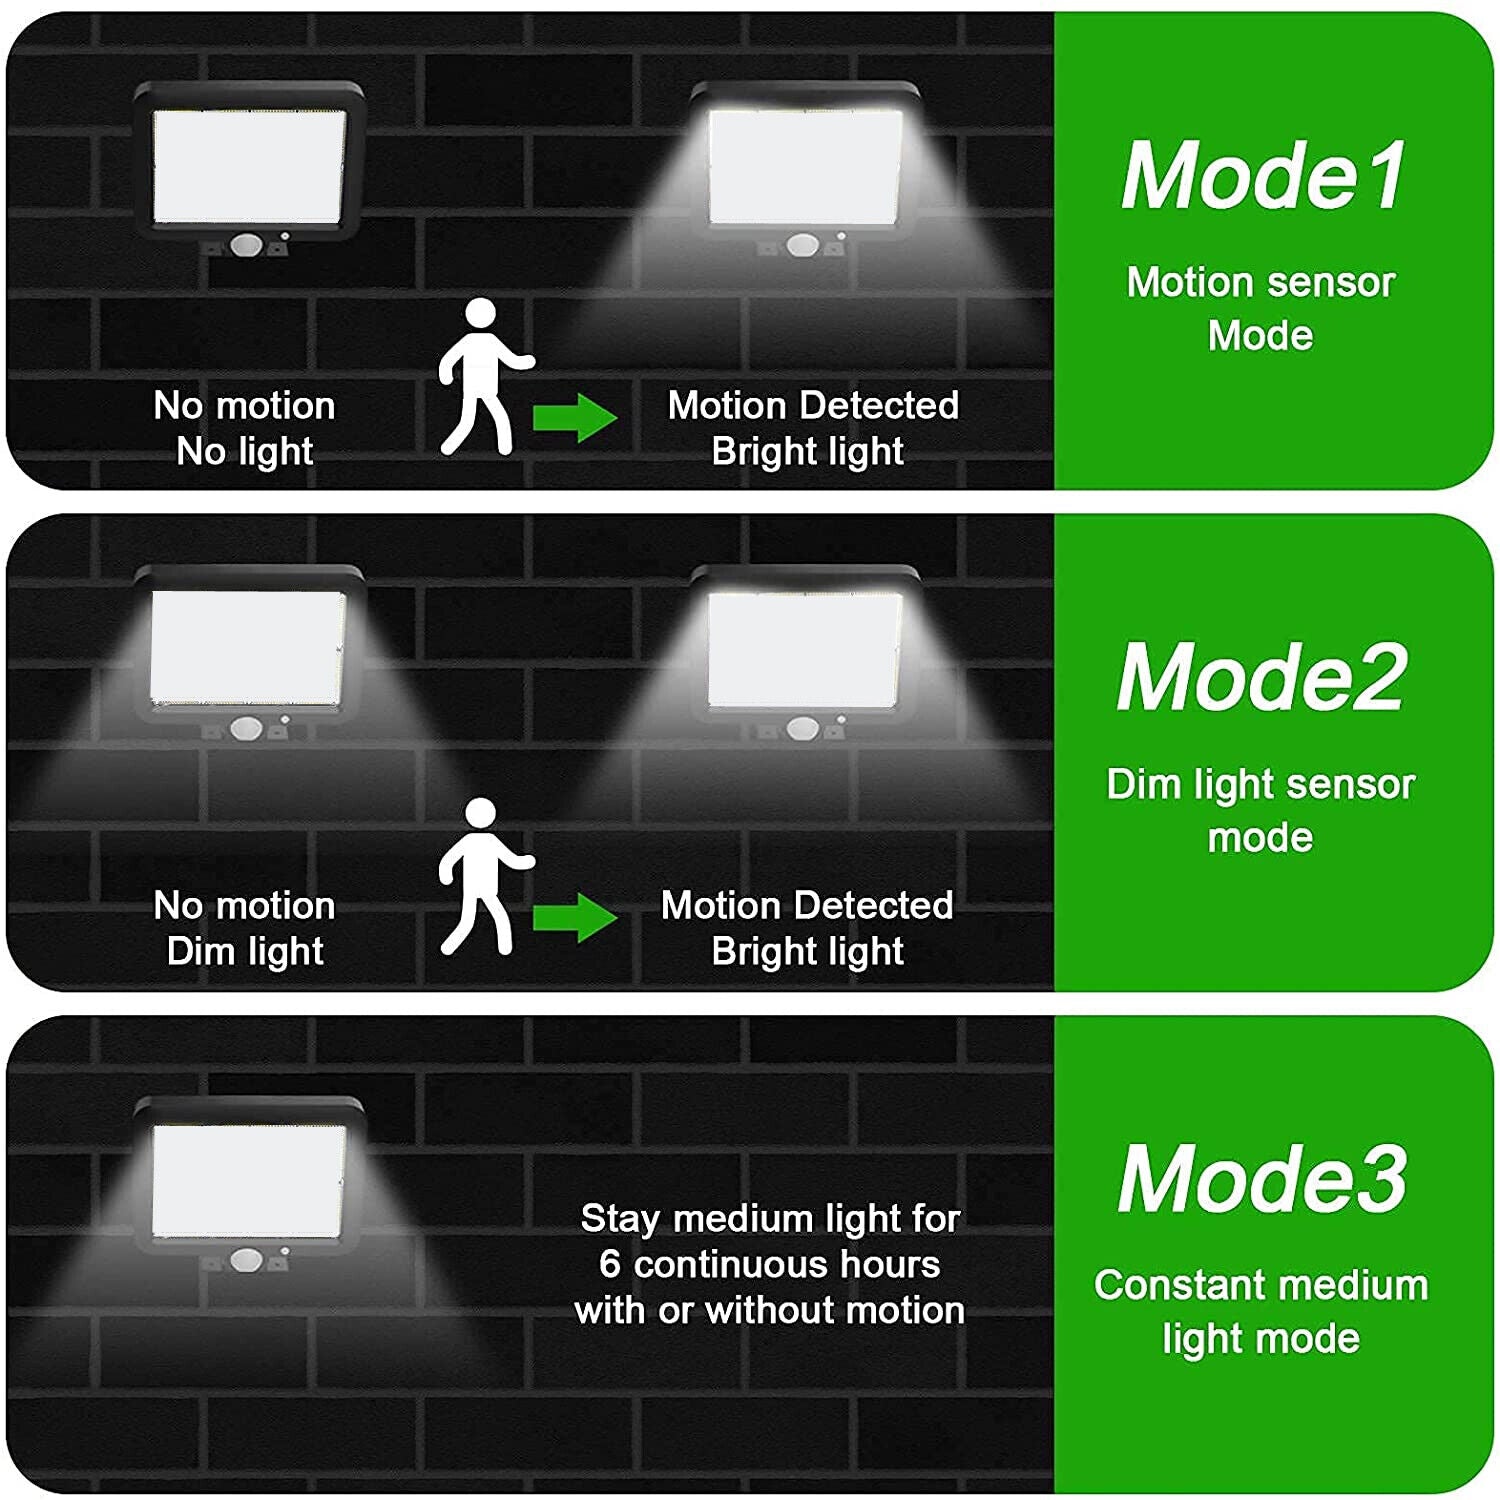 Solar Powered Motion Sensor Flood Lights Outdoor separate Panel 3 Lighting Mode